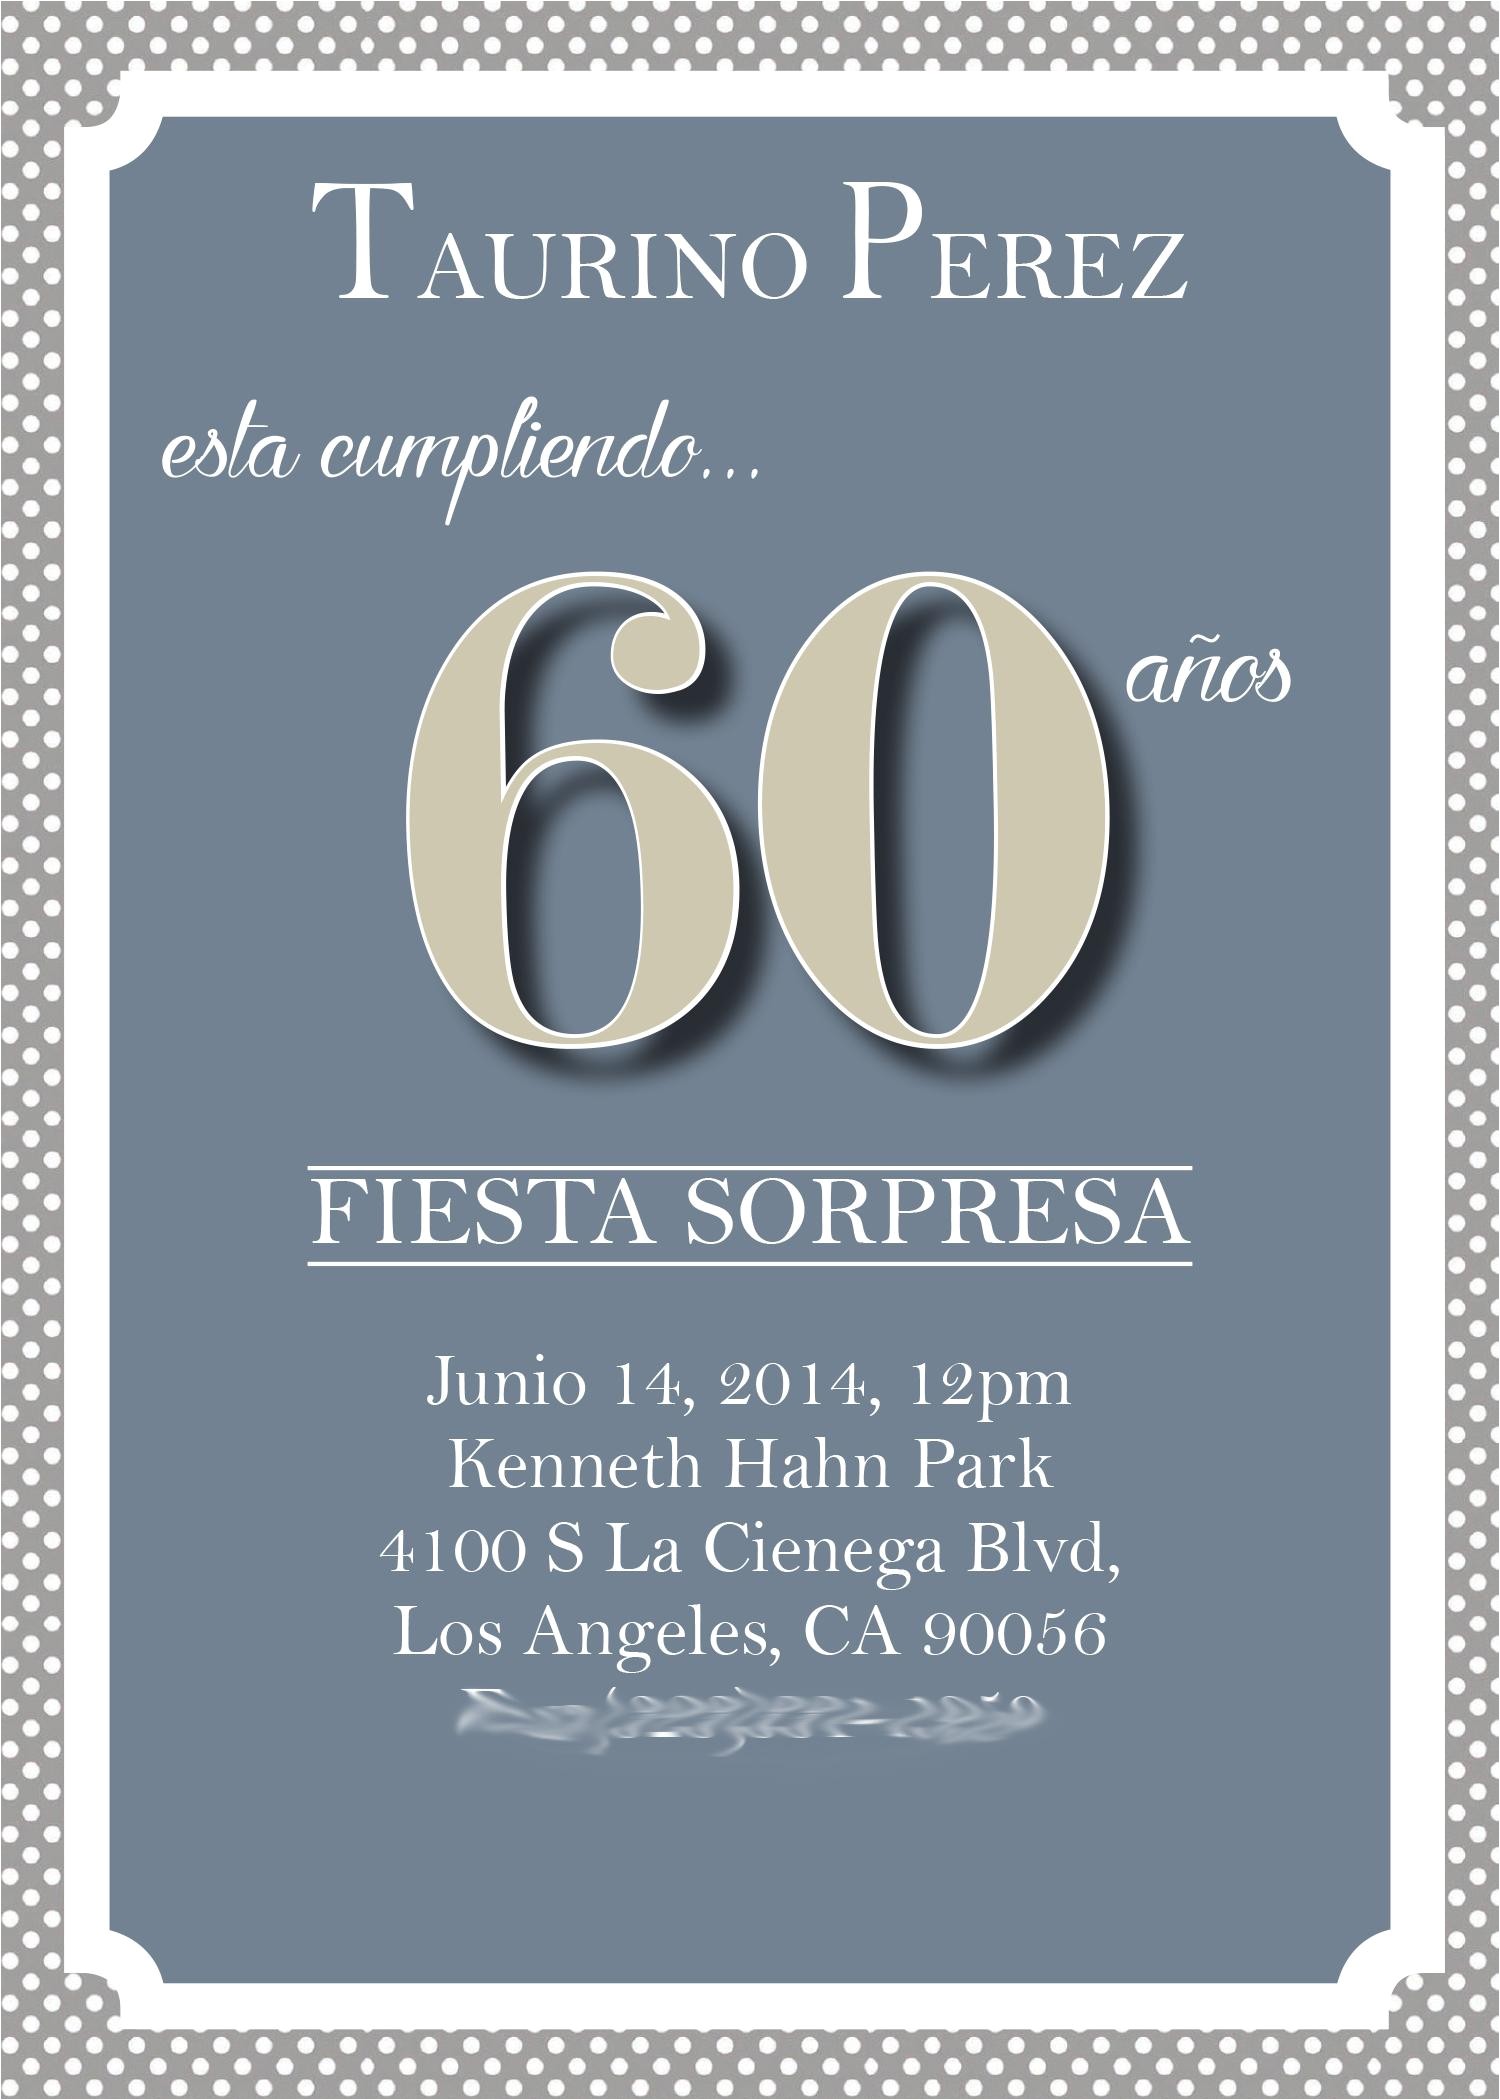 60th Birthday Invitation Sample 60th Birthday Party Invitations Party Invitations Templates